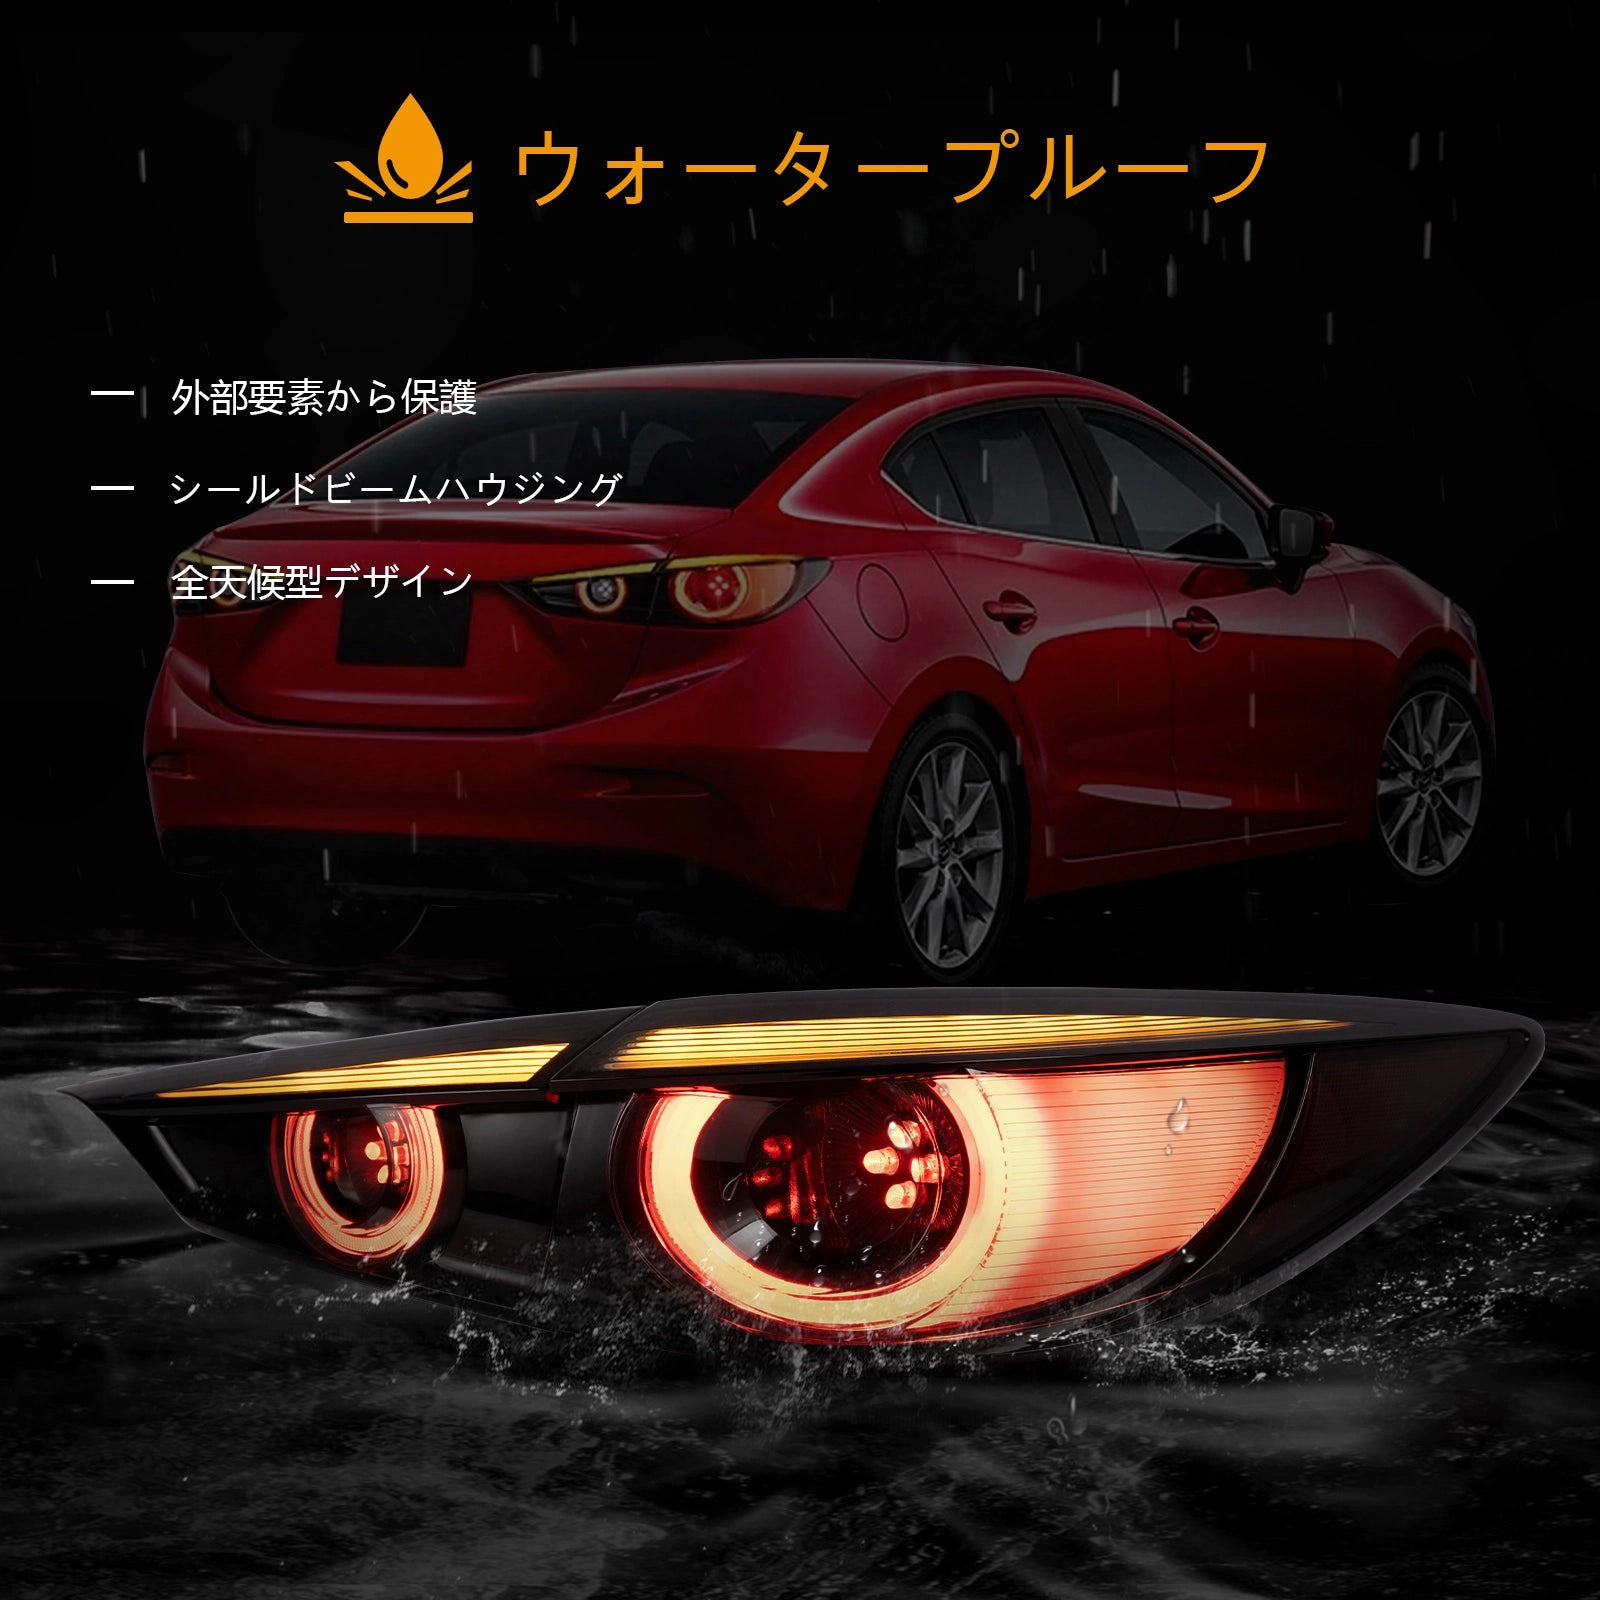 14-18 Mazda3 Axela 3th Gen(BM,BN) セダン Vland LEDテールランプ ダイナミックウェルカムライトスモーク仕様